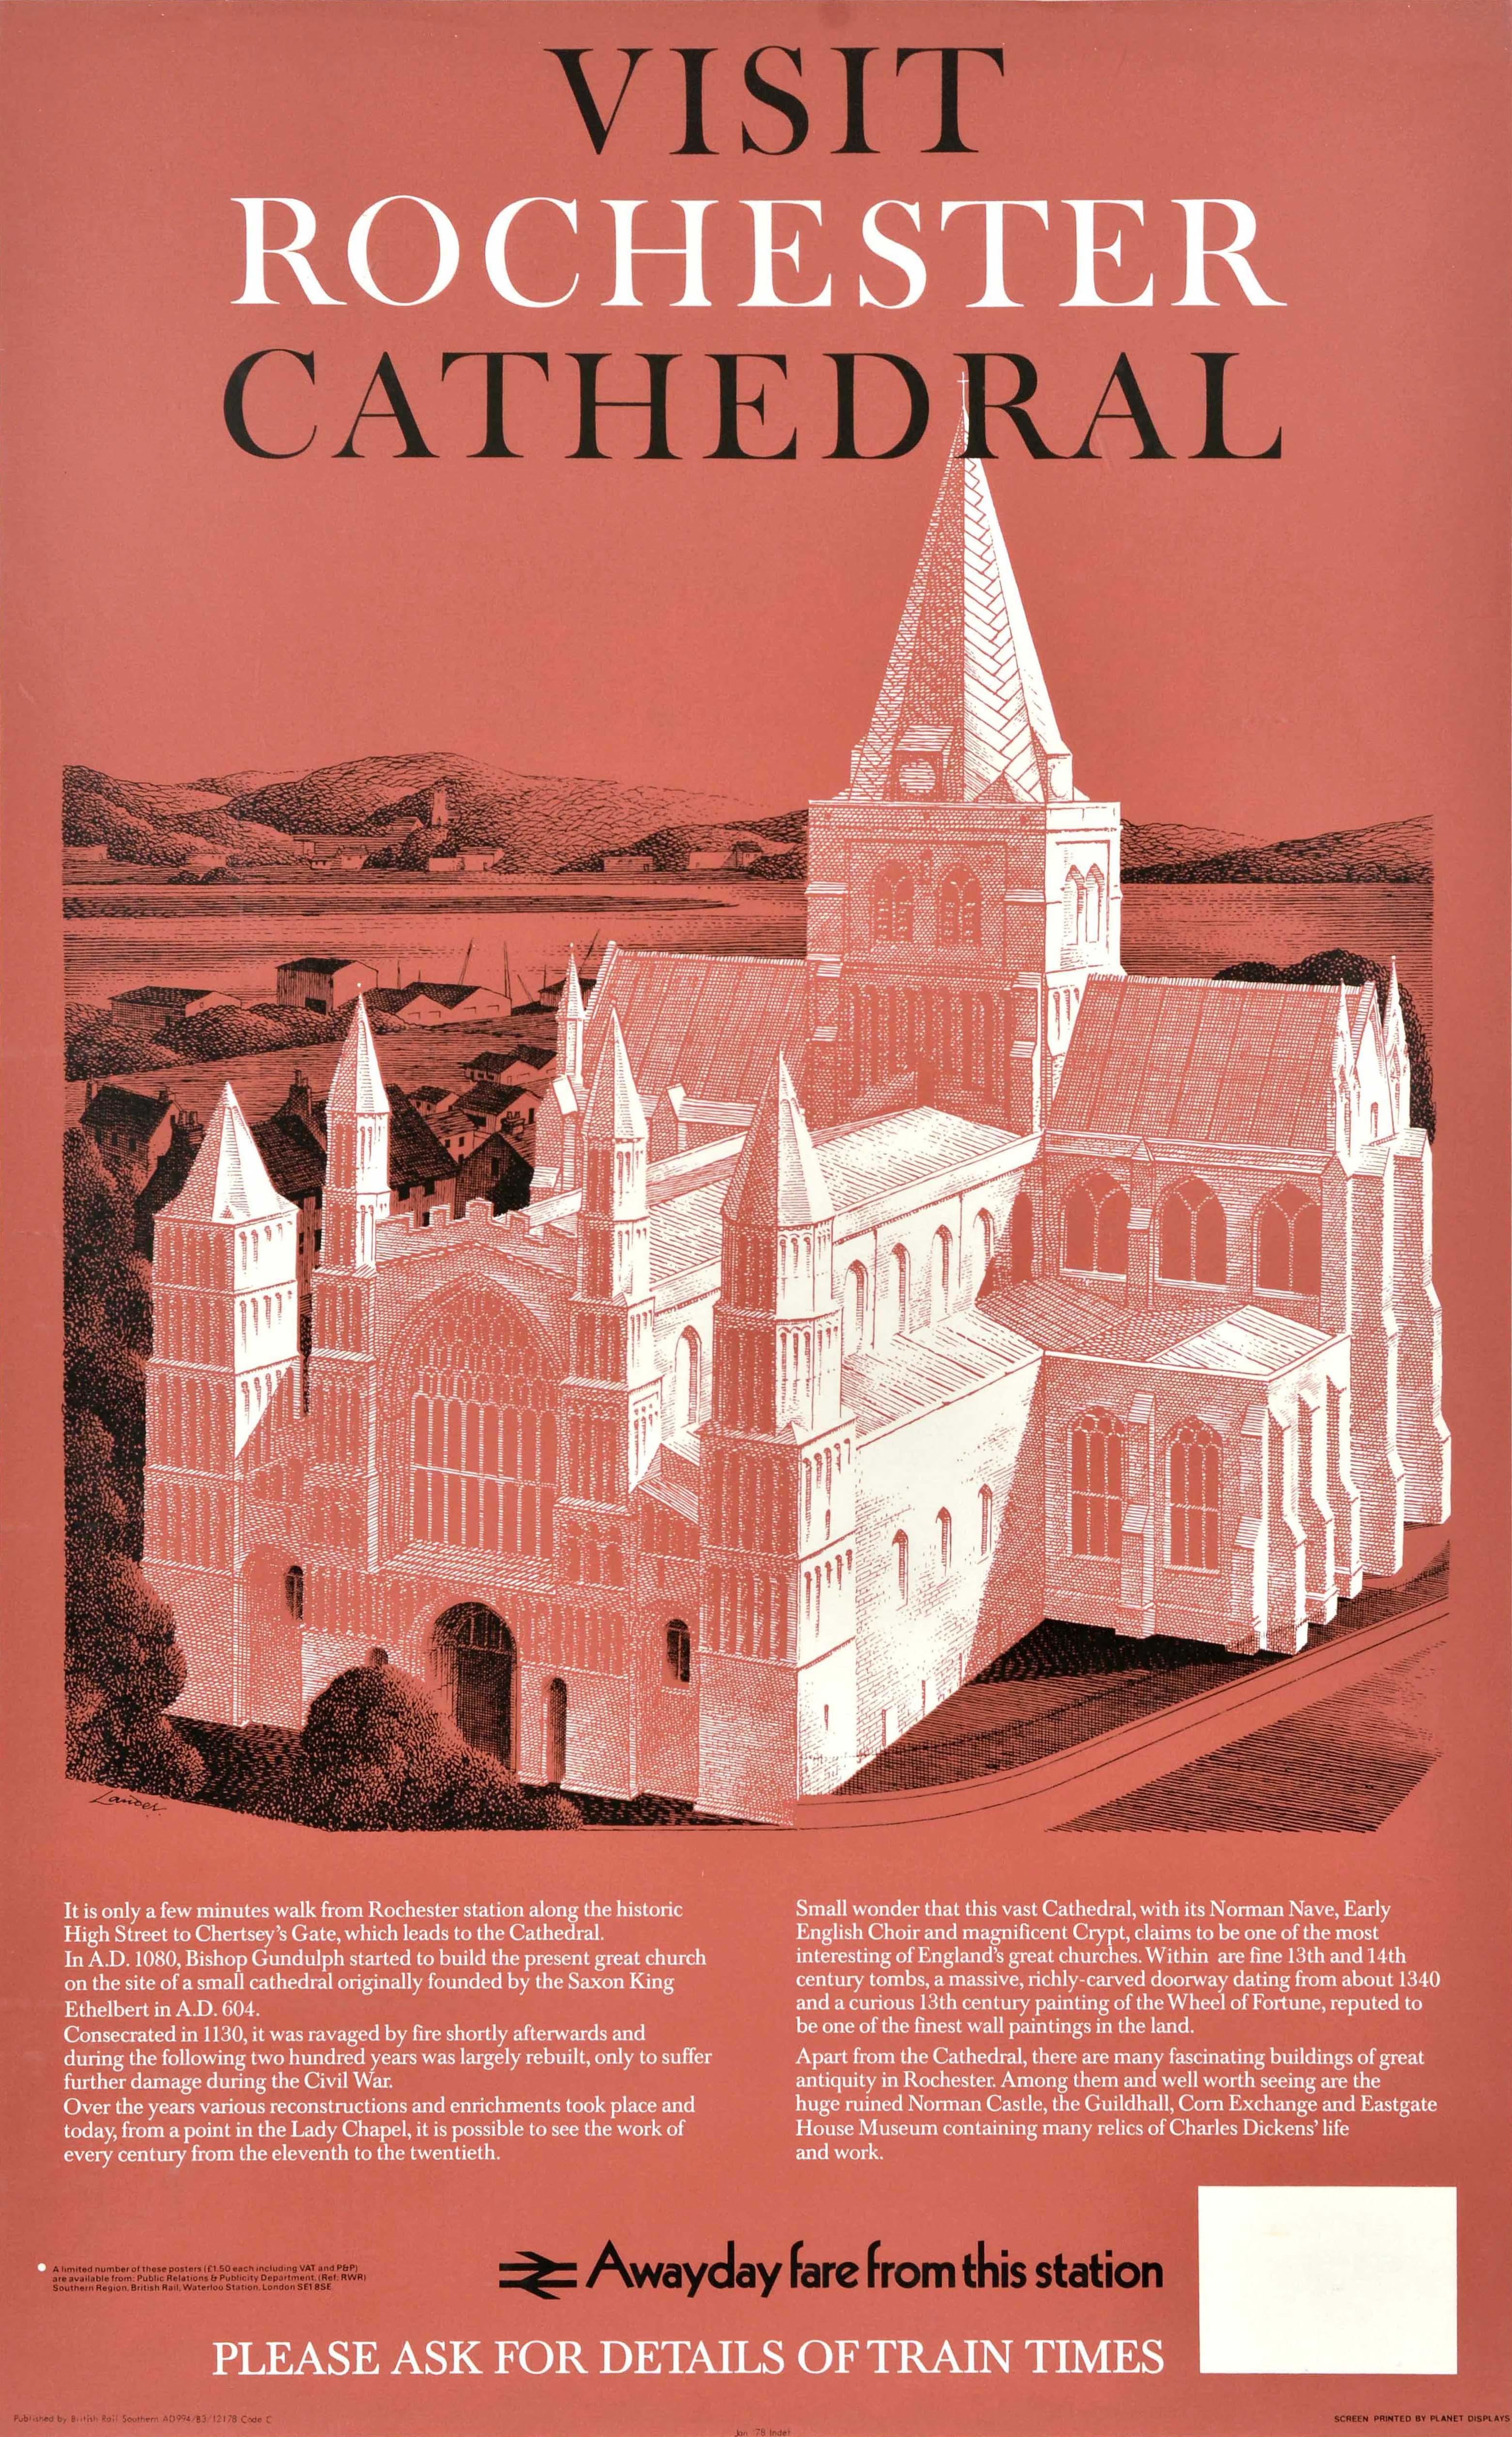 Reginald Lander Print – Original Vintage-Vintage-Reiseplakat, Zug, Rochester Kathedrale, British Rail Lander